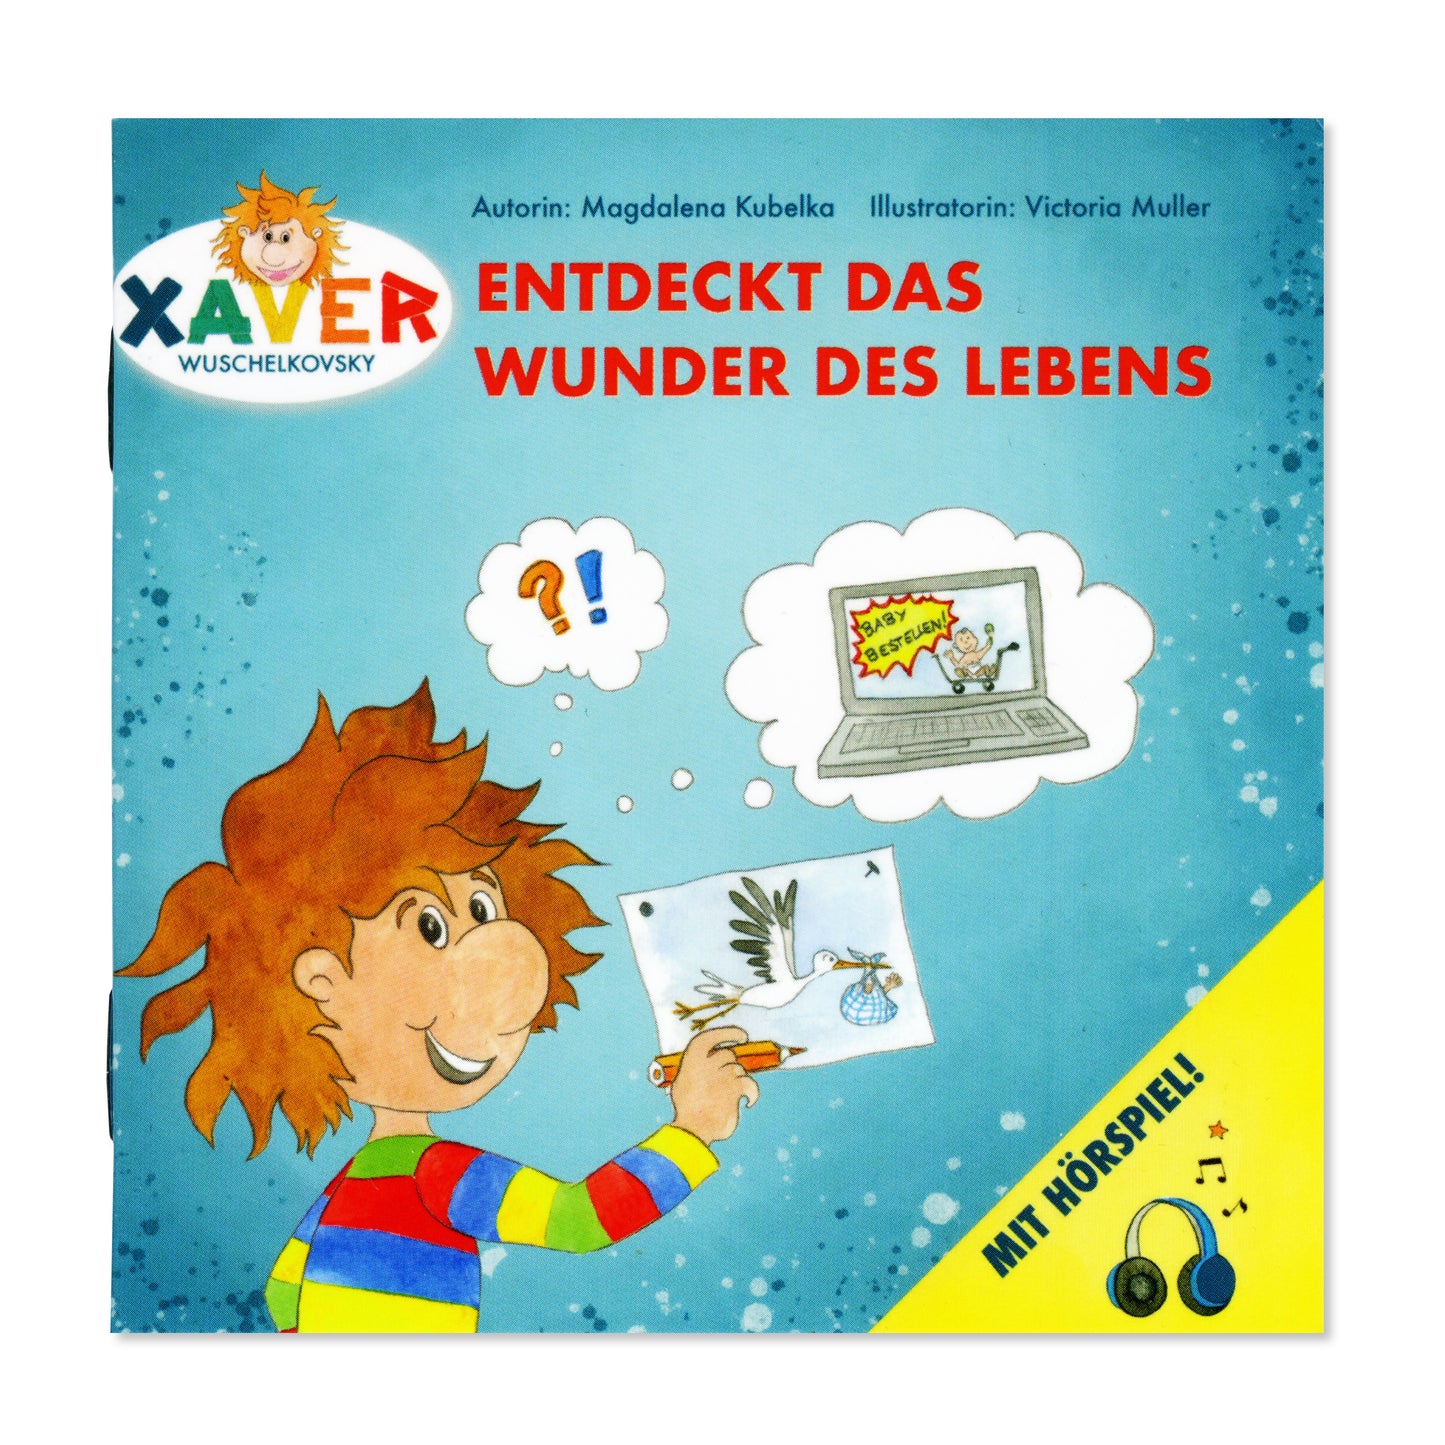 Xaver: Kinderbuch "Wunder des Lebens"